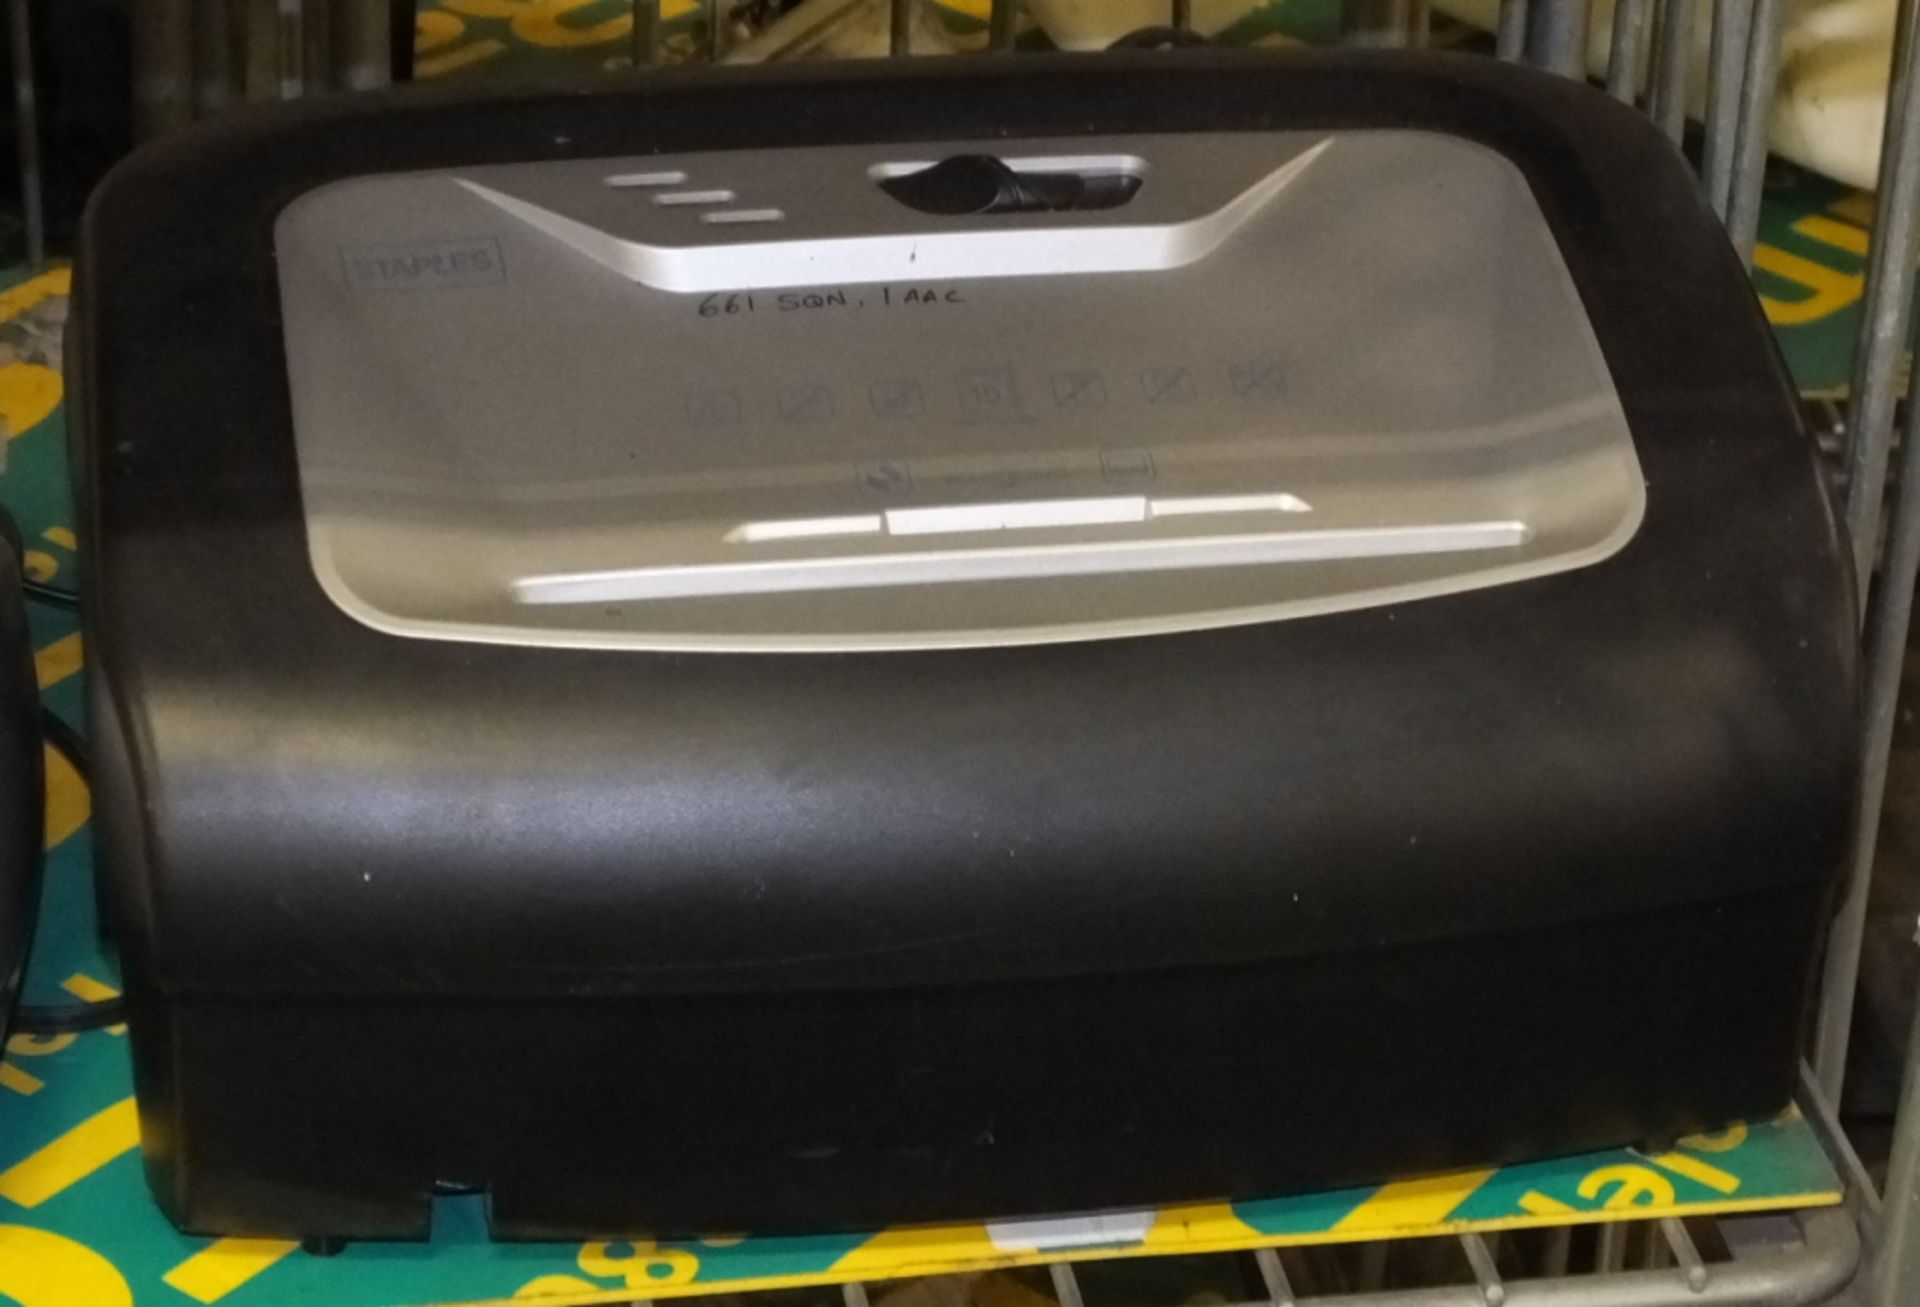 GBC Heatseal machine H415, Staples office shredder head unit (no base) - Image 3 of 3